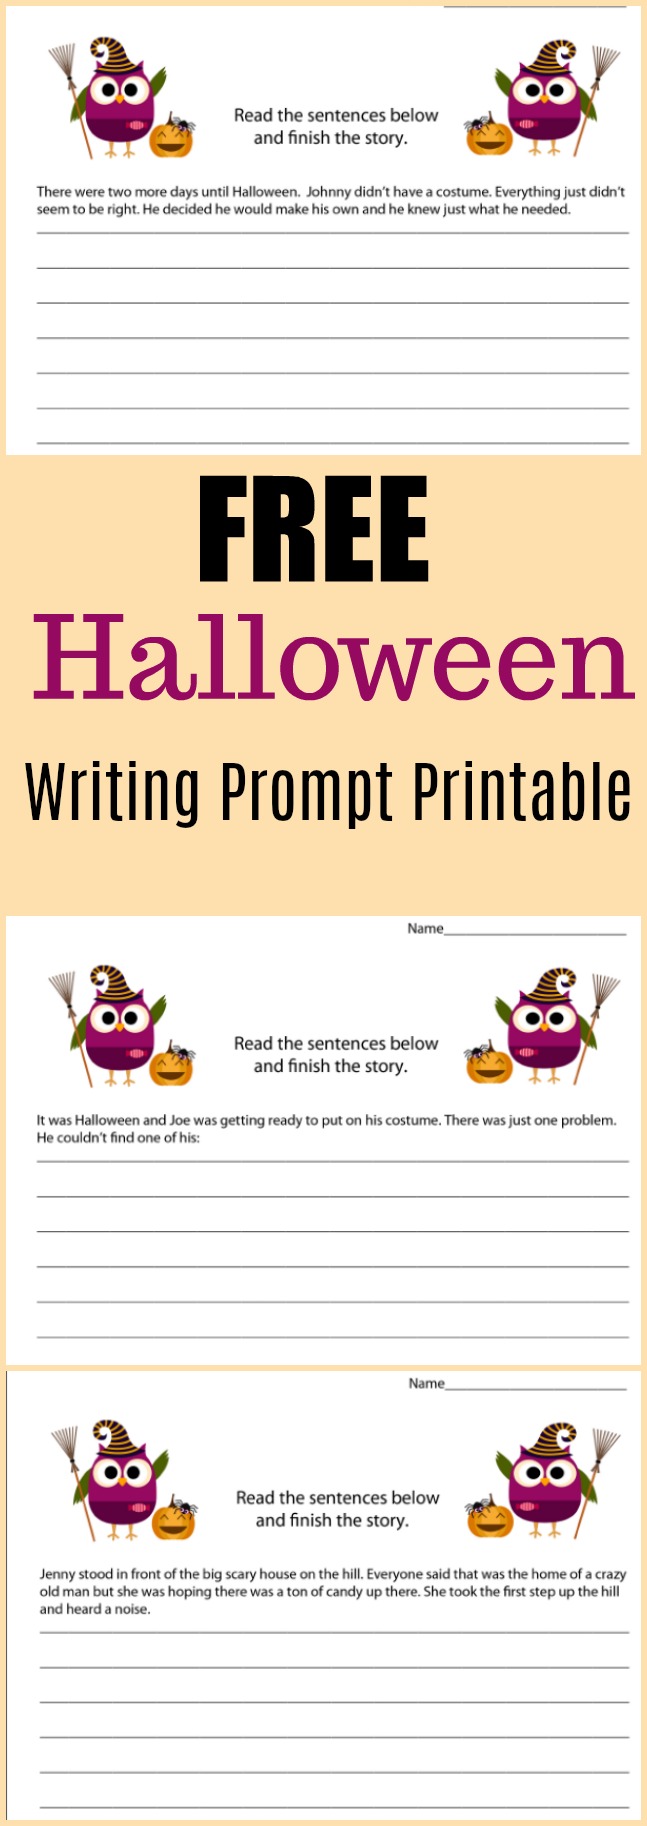 Free Halloween Writing Prompt Printable